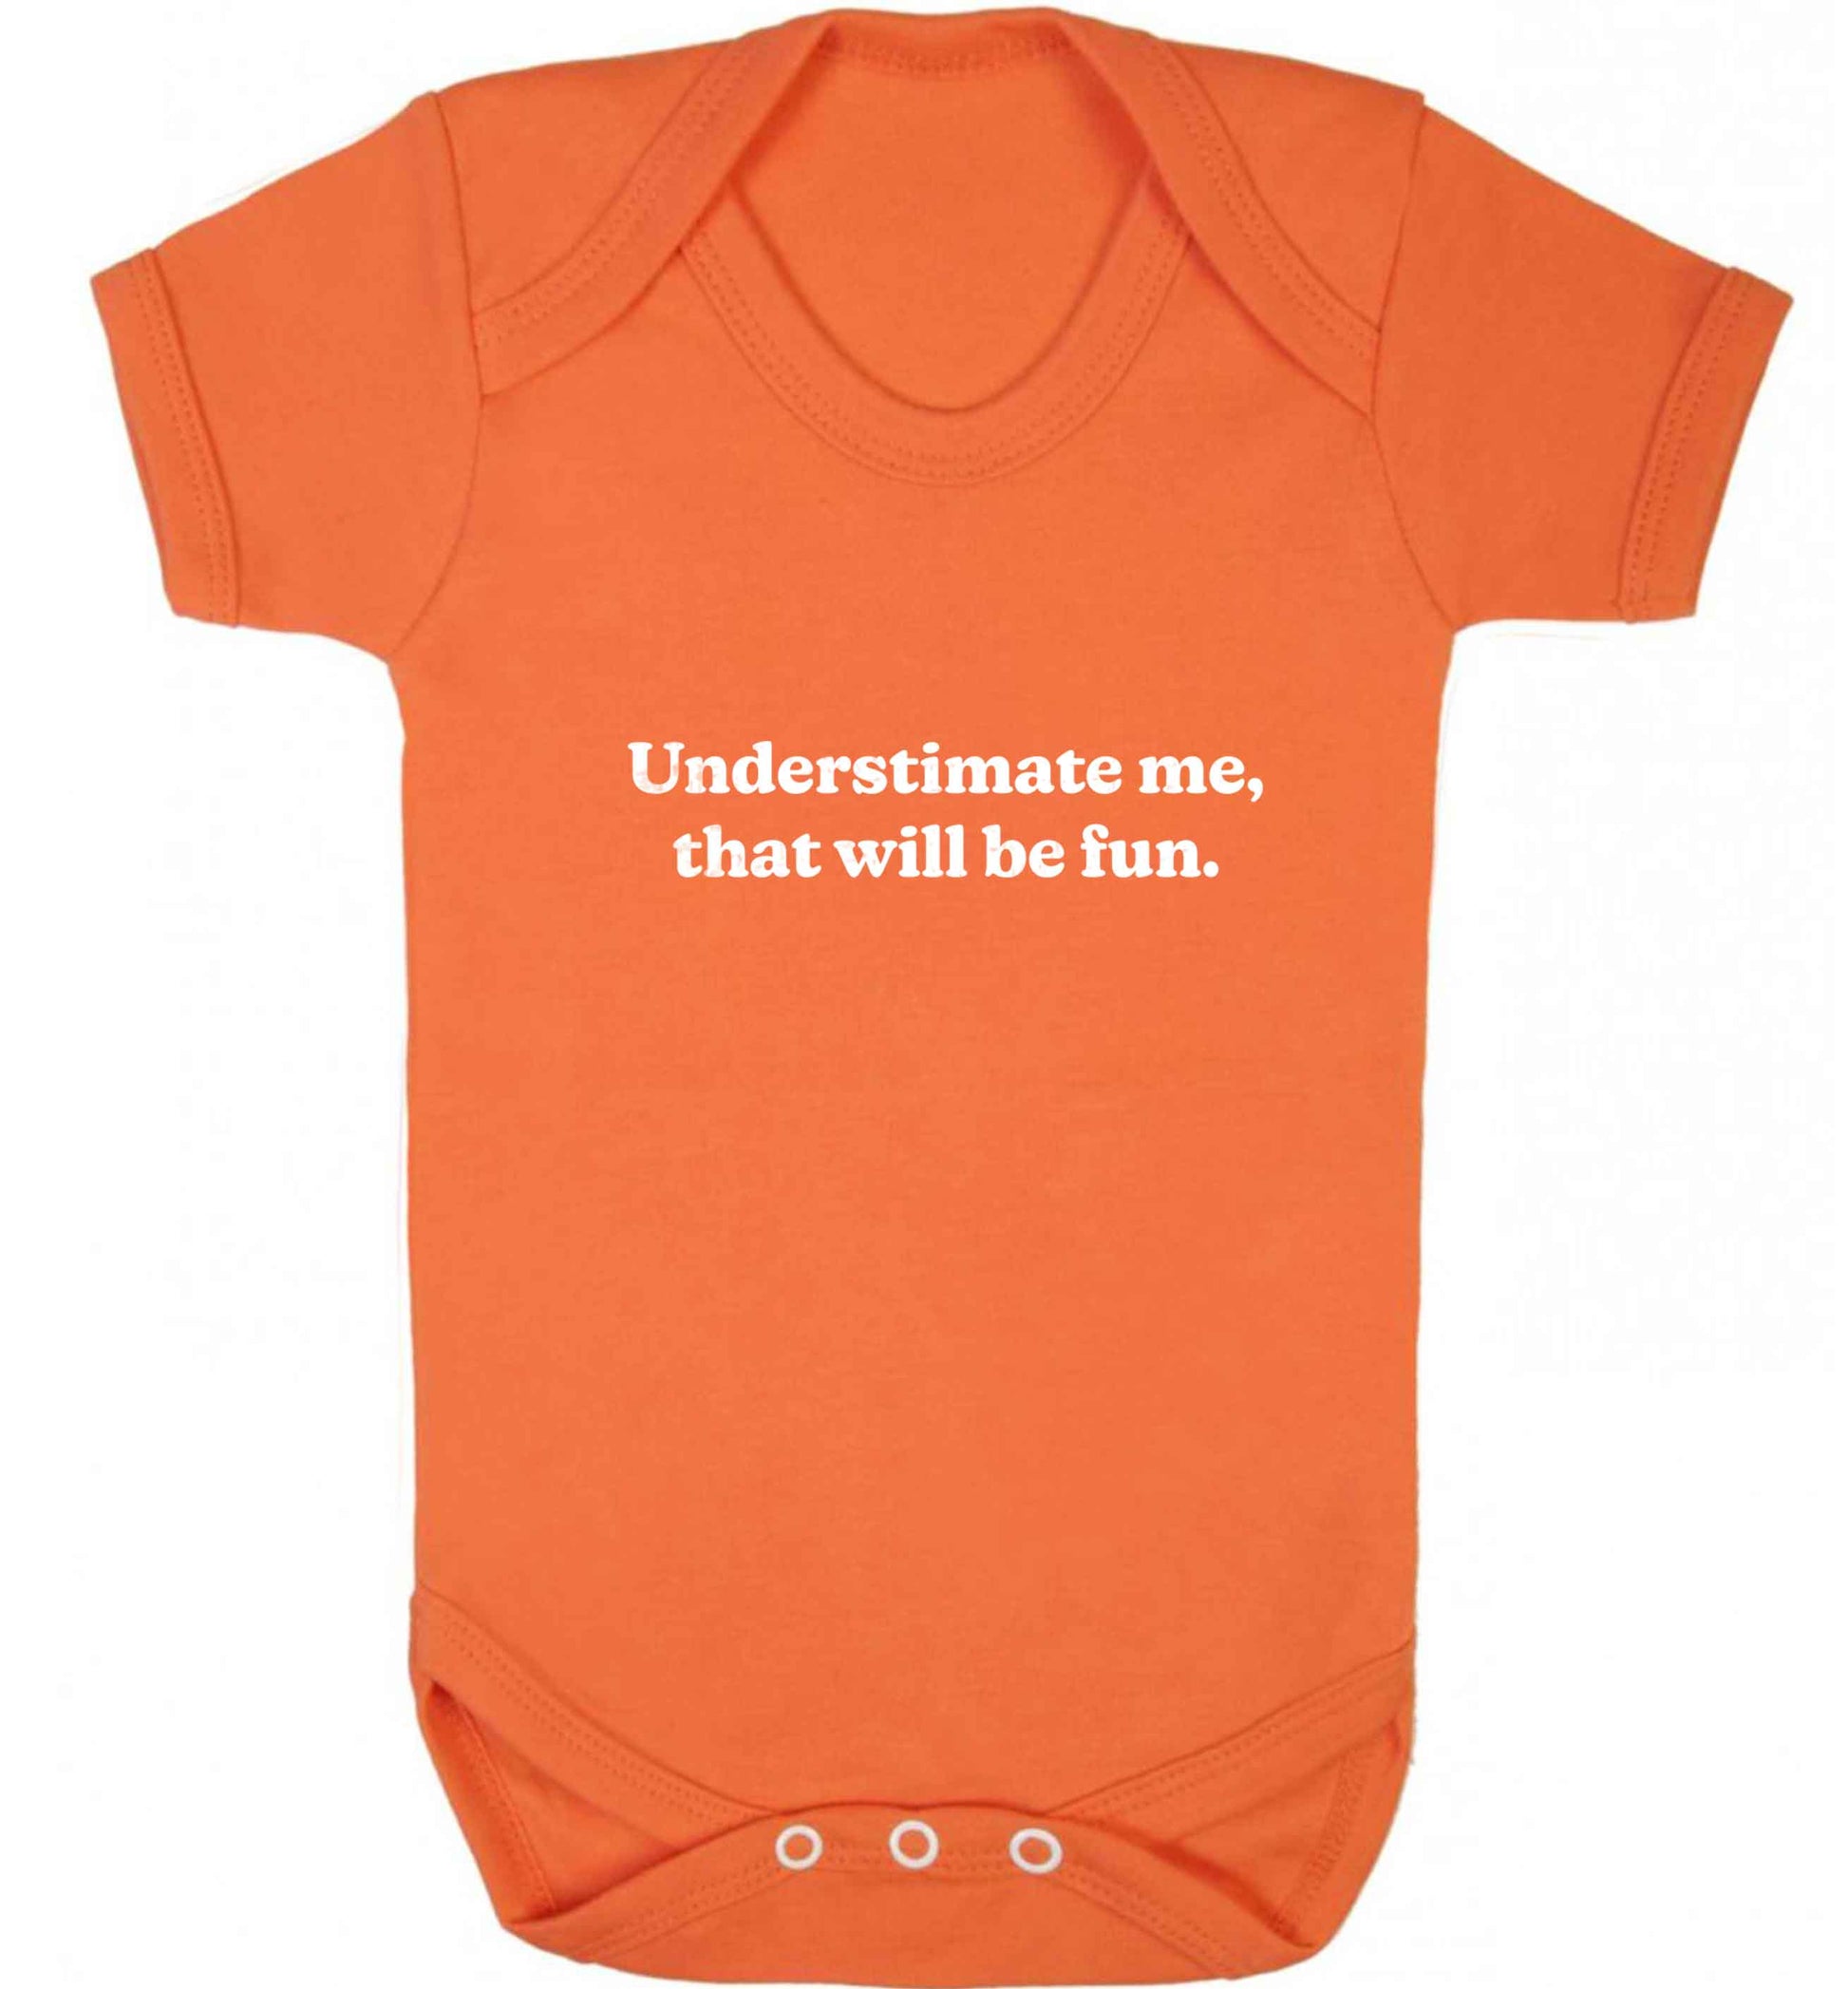 Underestimate me that will be fun baby vest orange 18-24 months